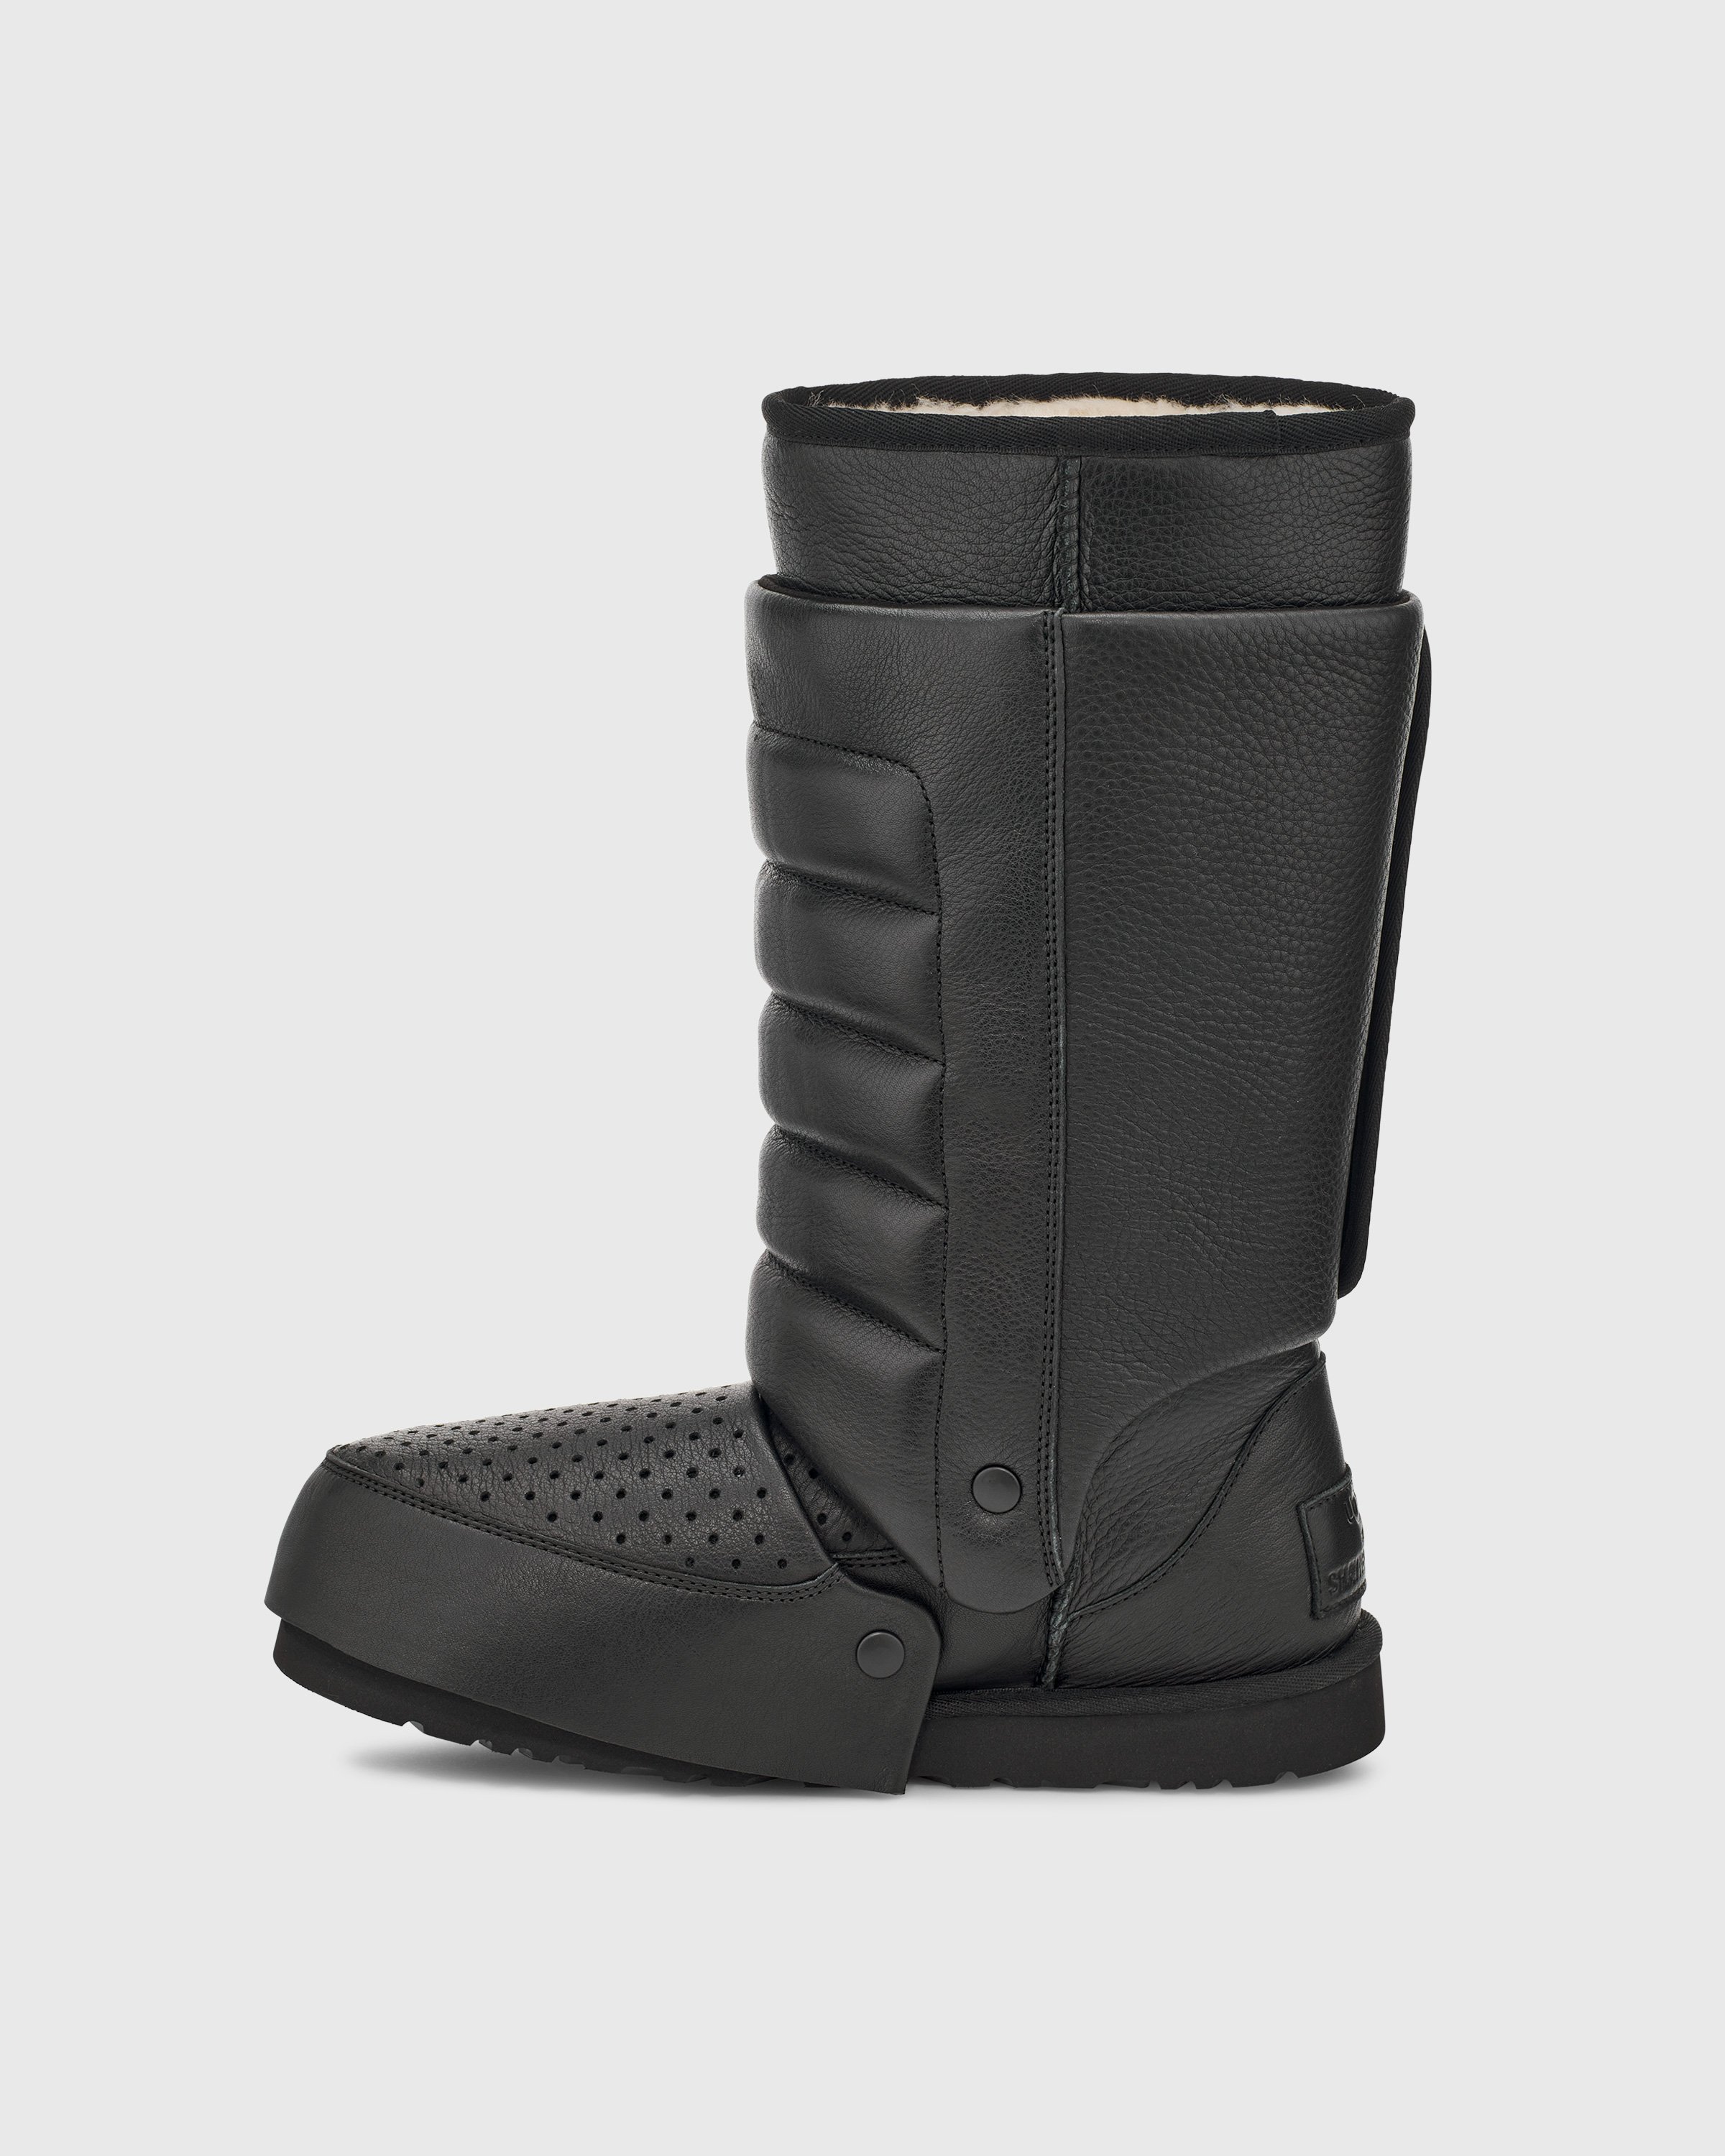 Ugg x Shayne Oliver - Tall Boot Black - Footwear - Black - Image 2